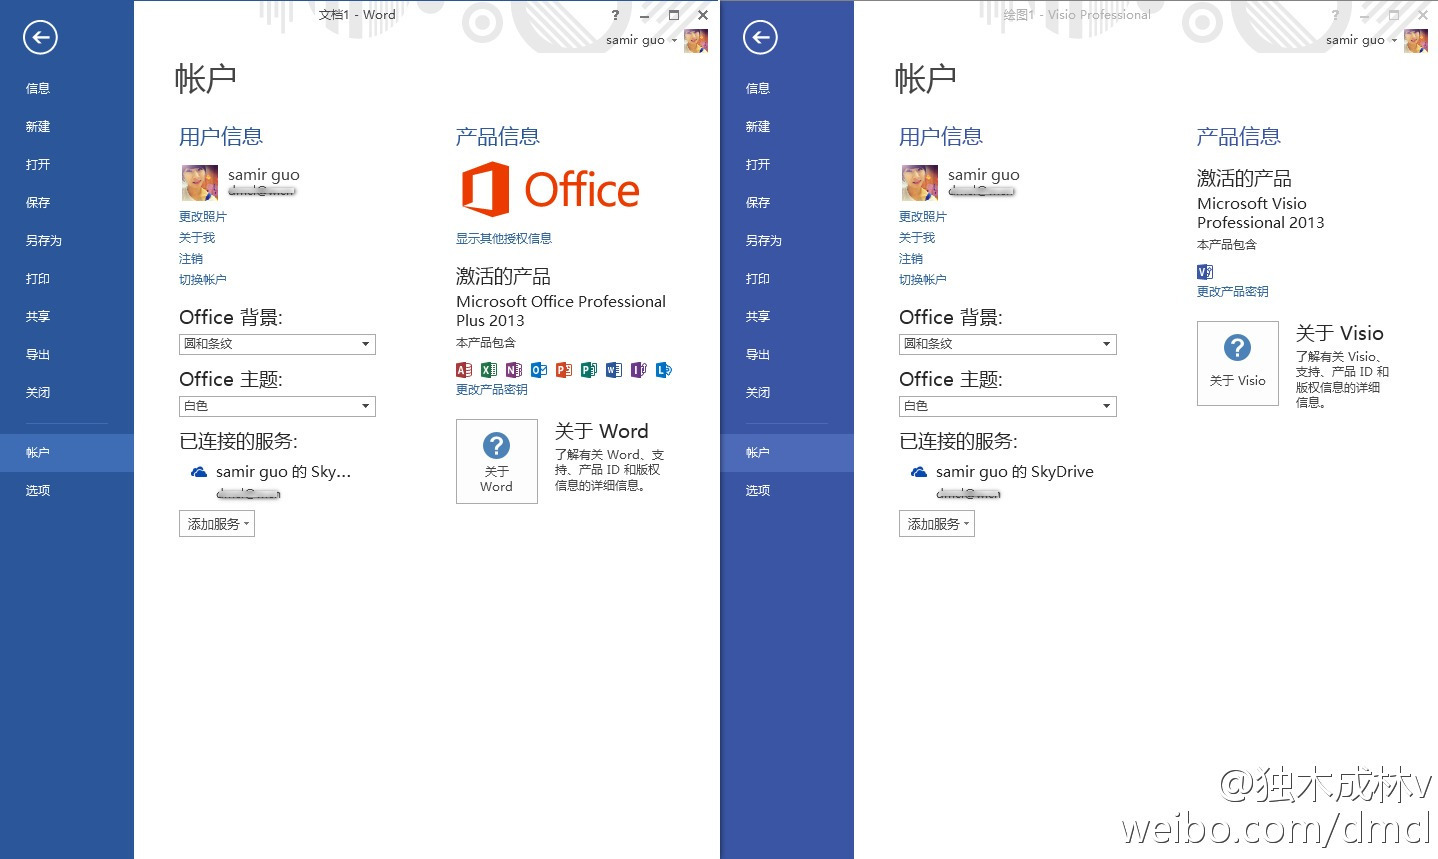 KMSnano 19 Automatic – Win8/Office2013一键激活工具